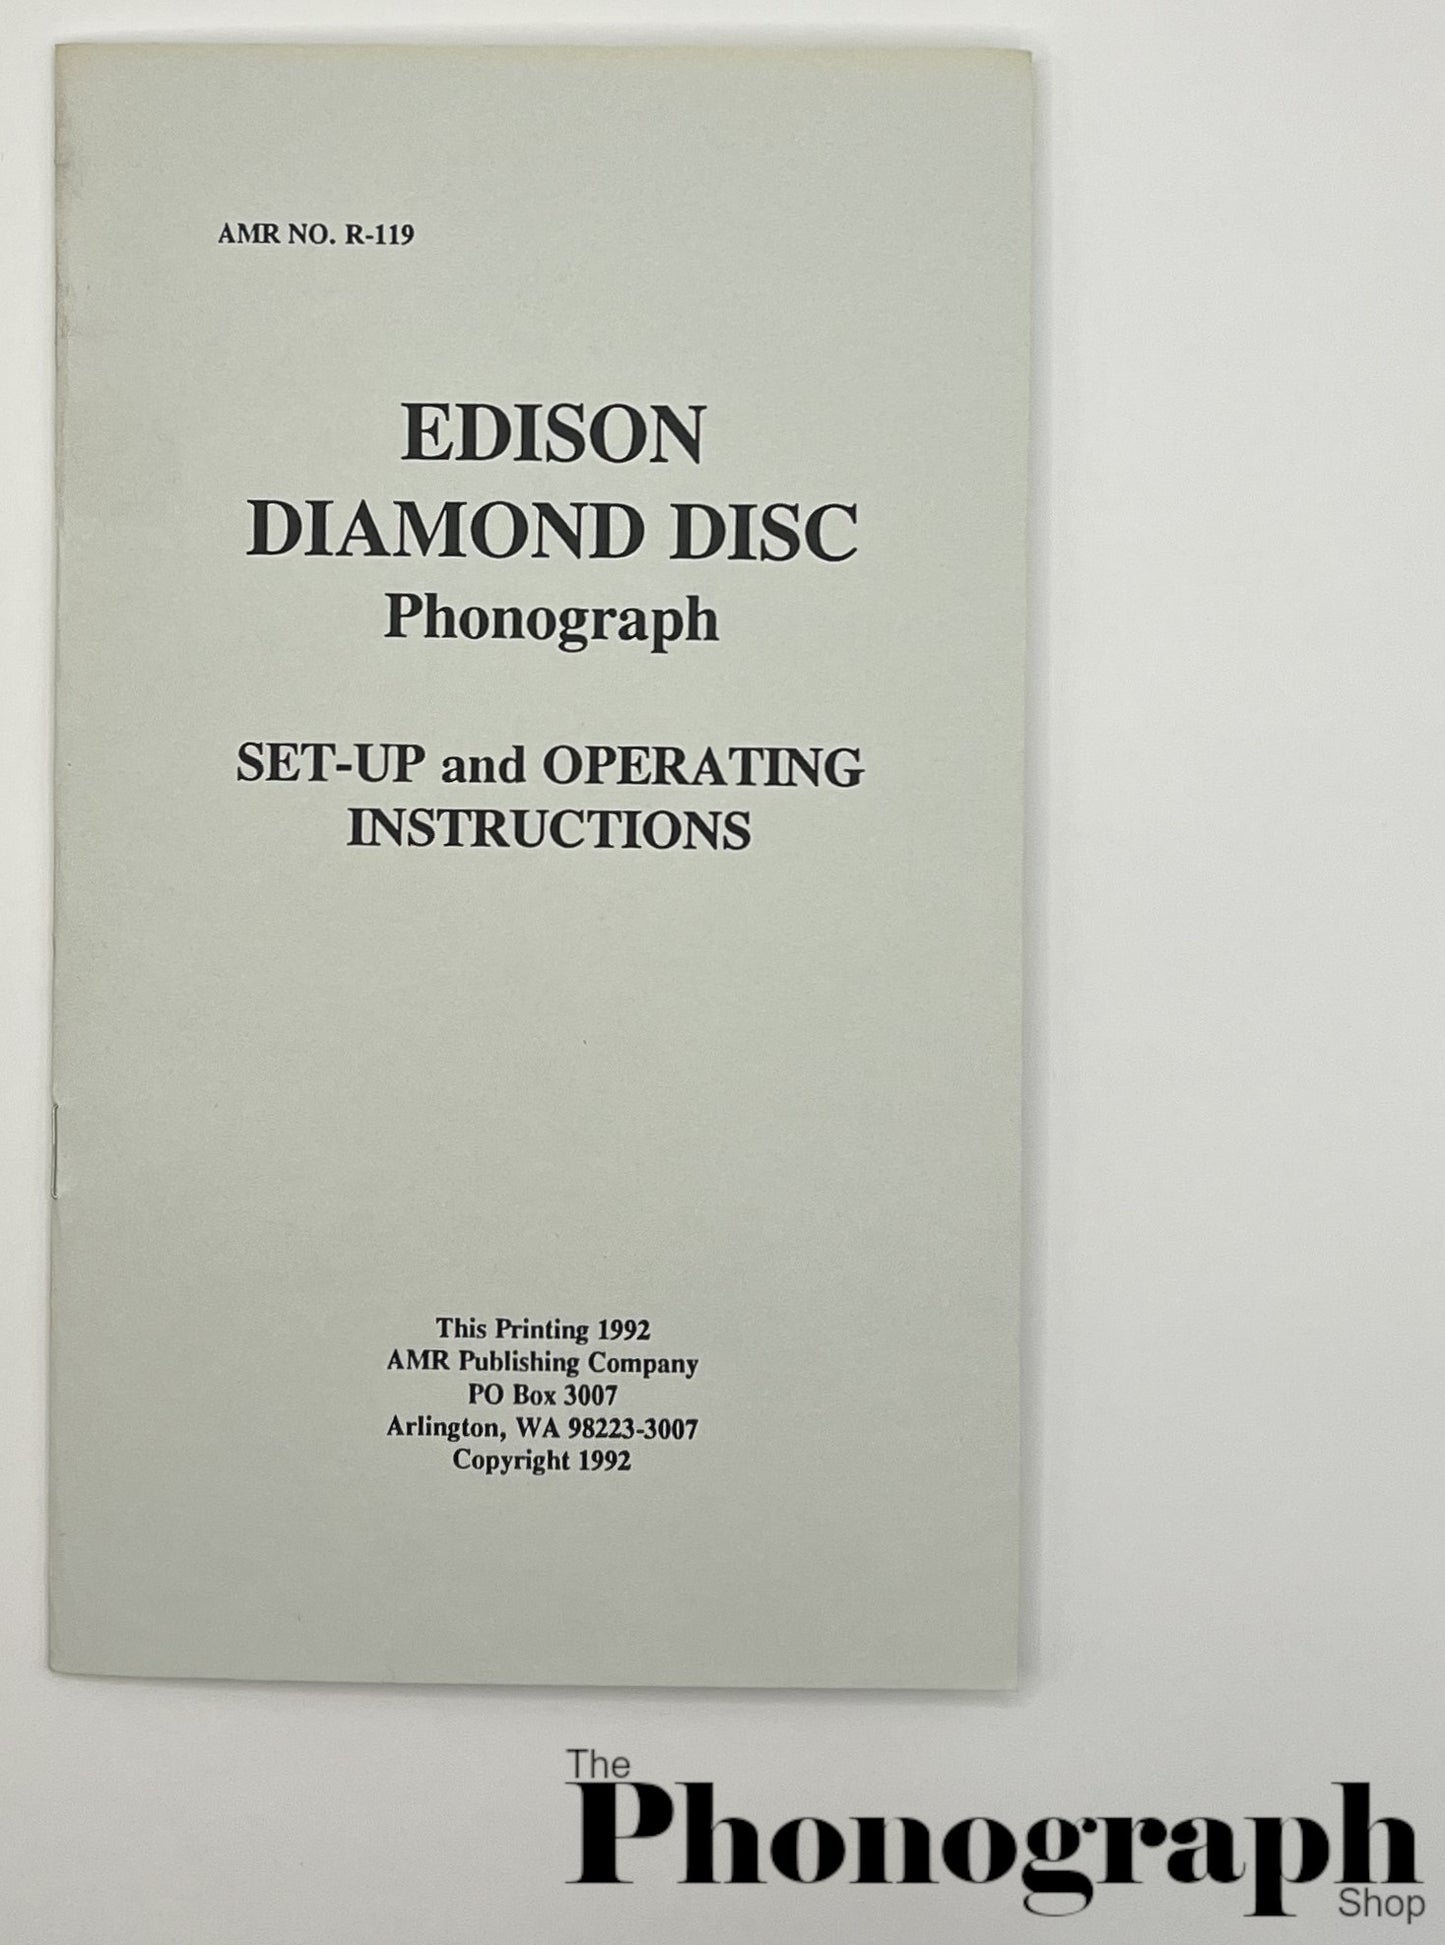 Edison Diamon Disc Instruction Manual from 1920 (15230-132M-2003) - Reprint